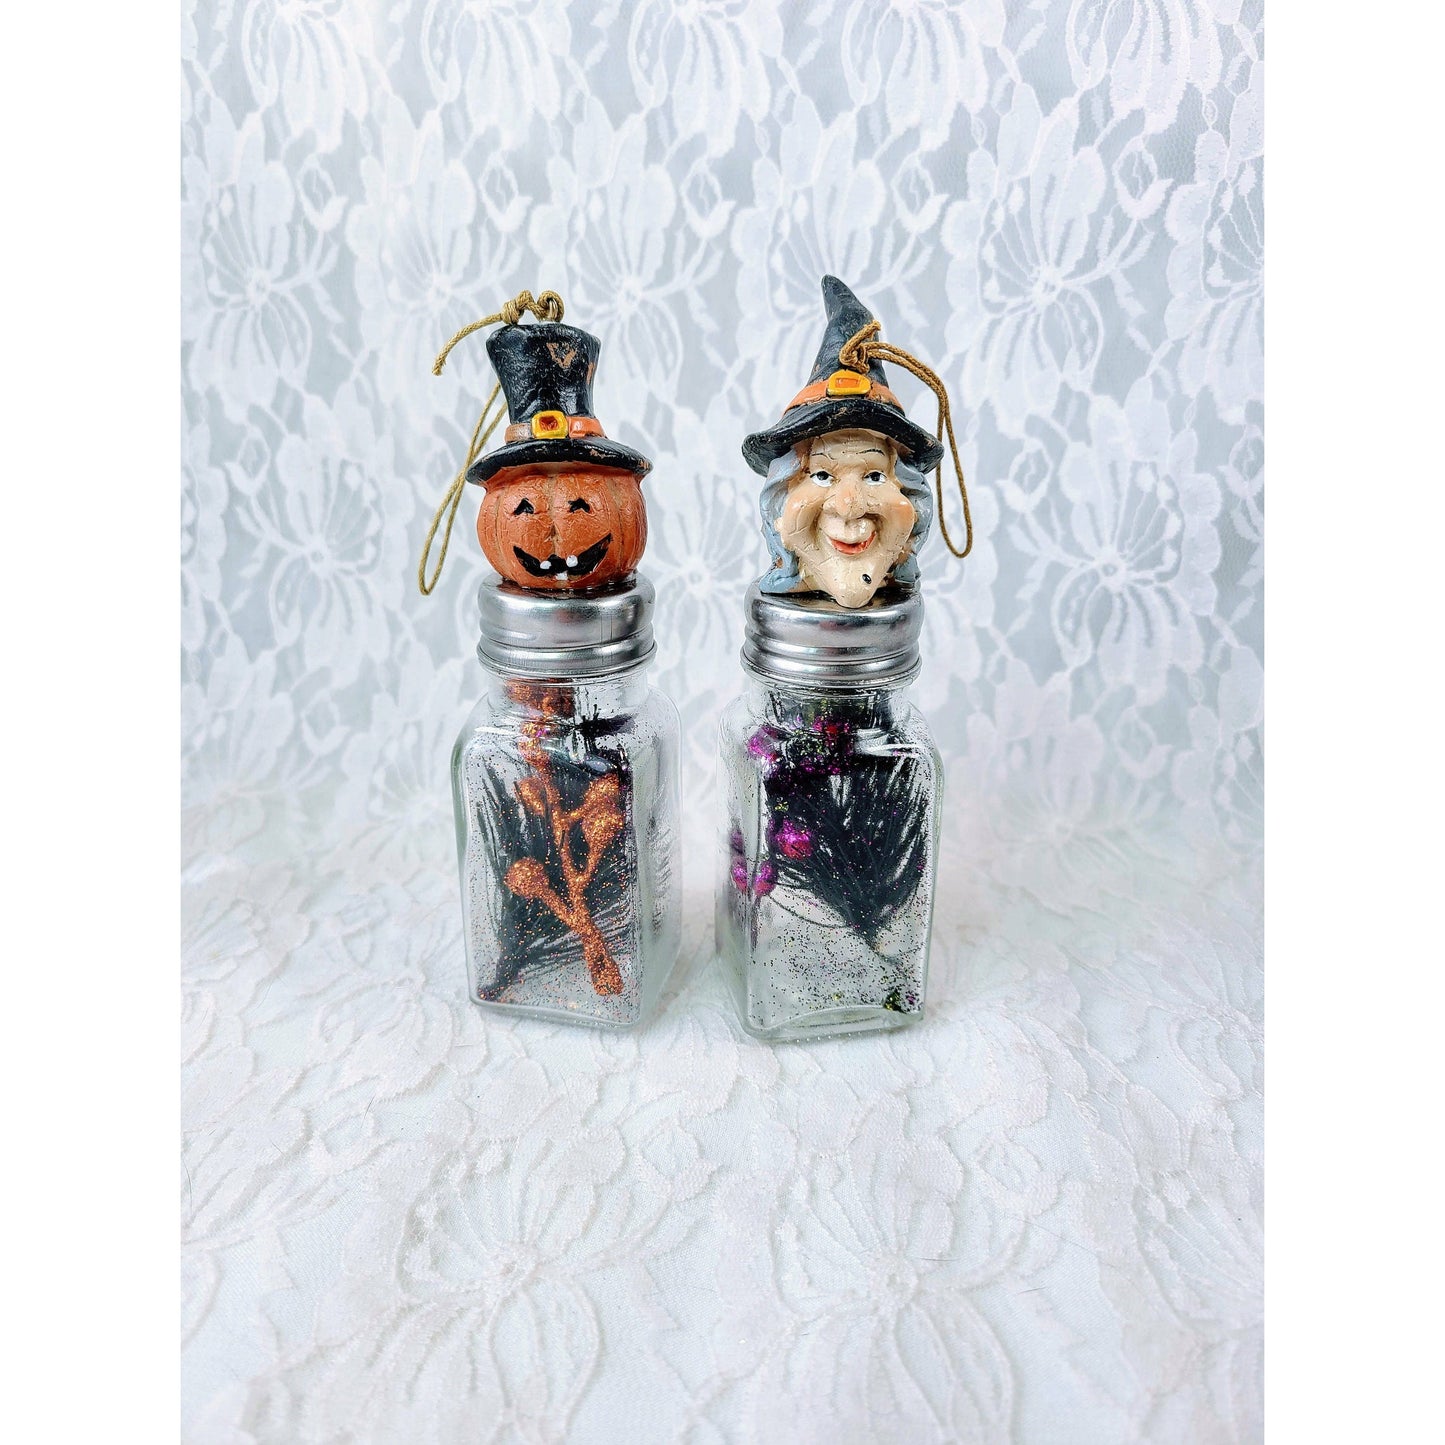 OOAK Handmade Repurposed Salt Pepper Shakers Light-Up Halloween Figurines ~ Halloween Décor ~ Fall Decoration